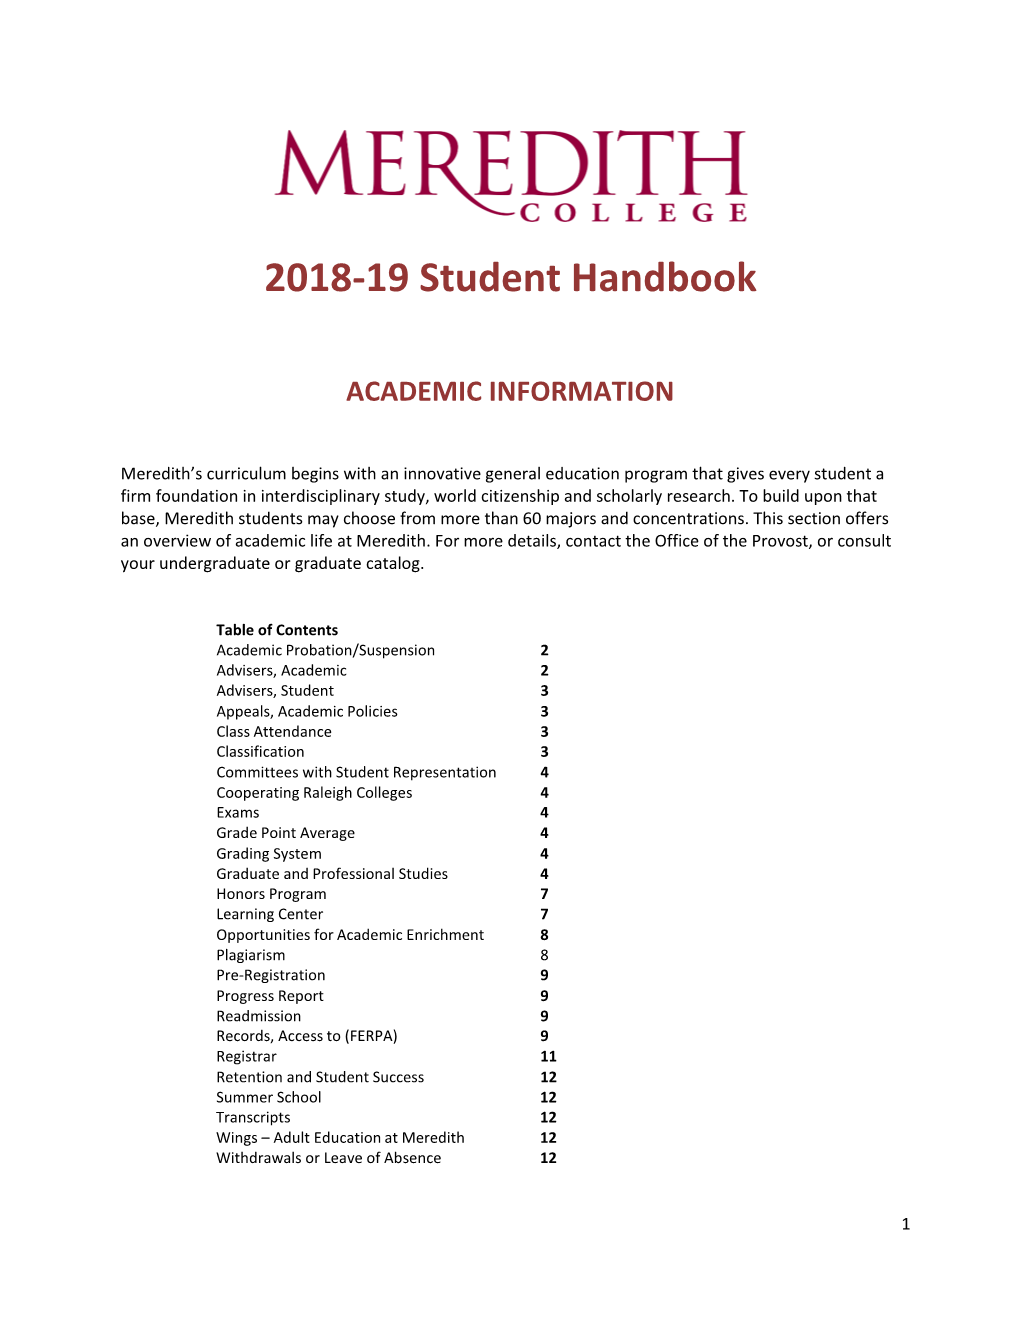 2018-19 Student Handbook Academic Information